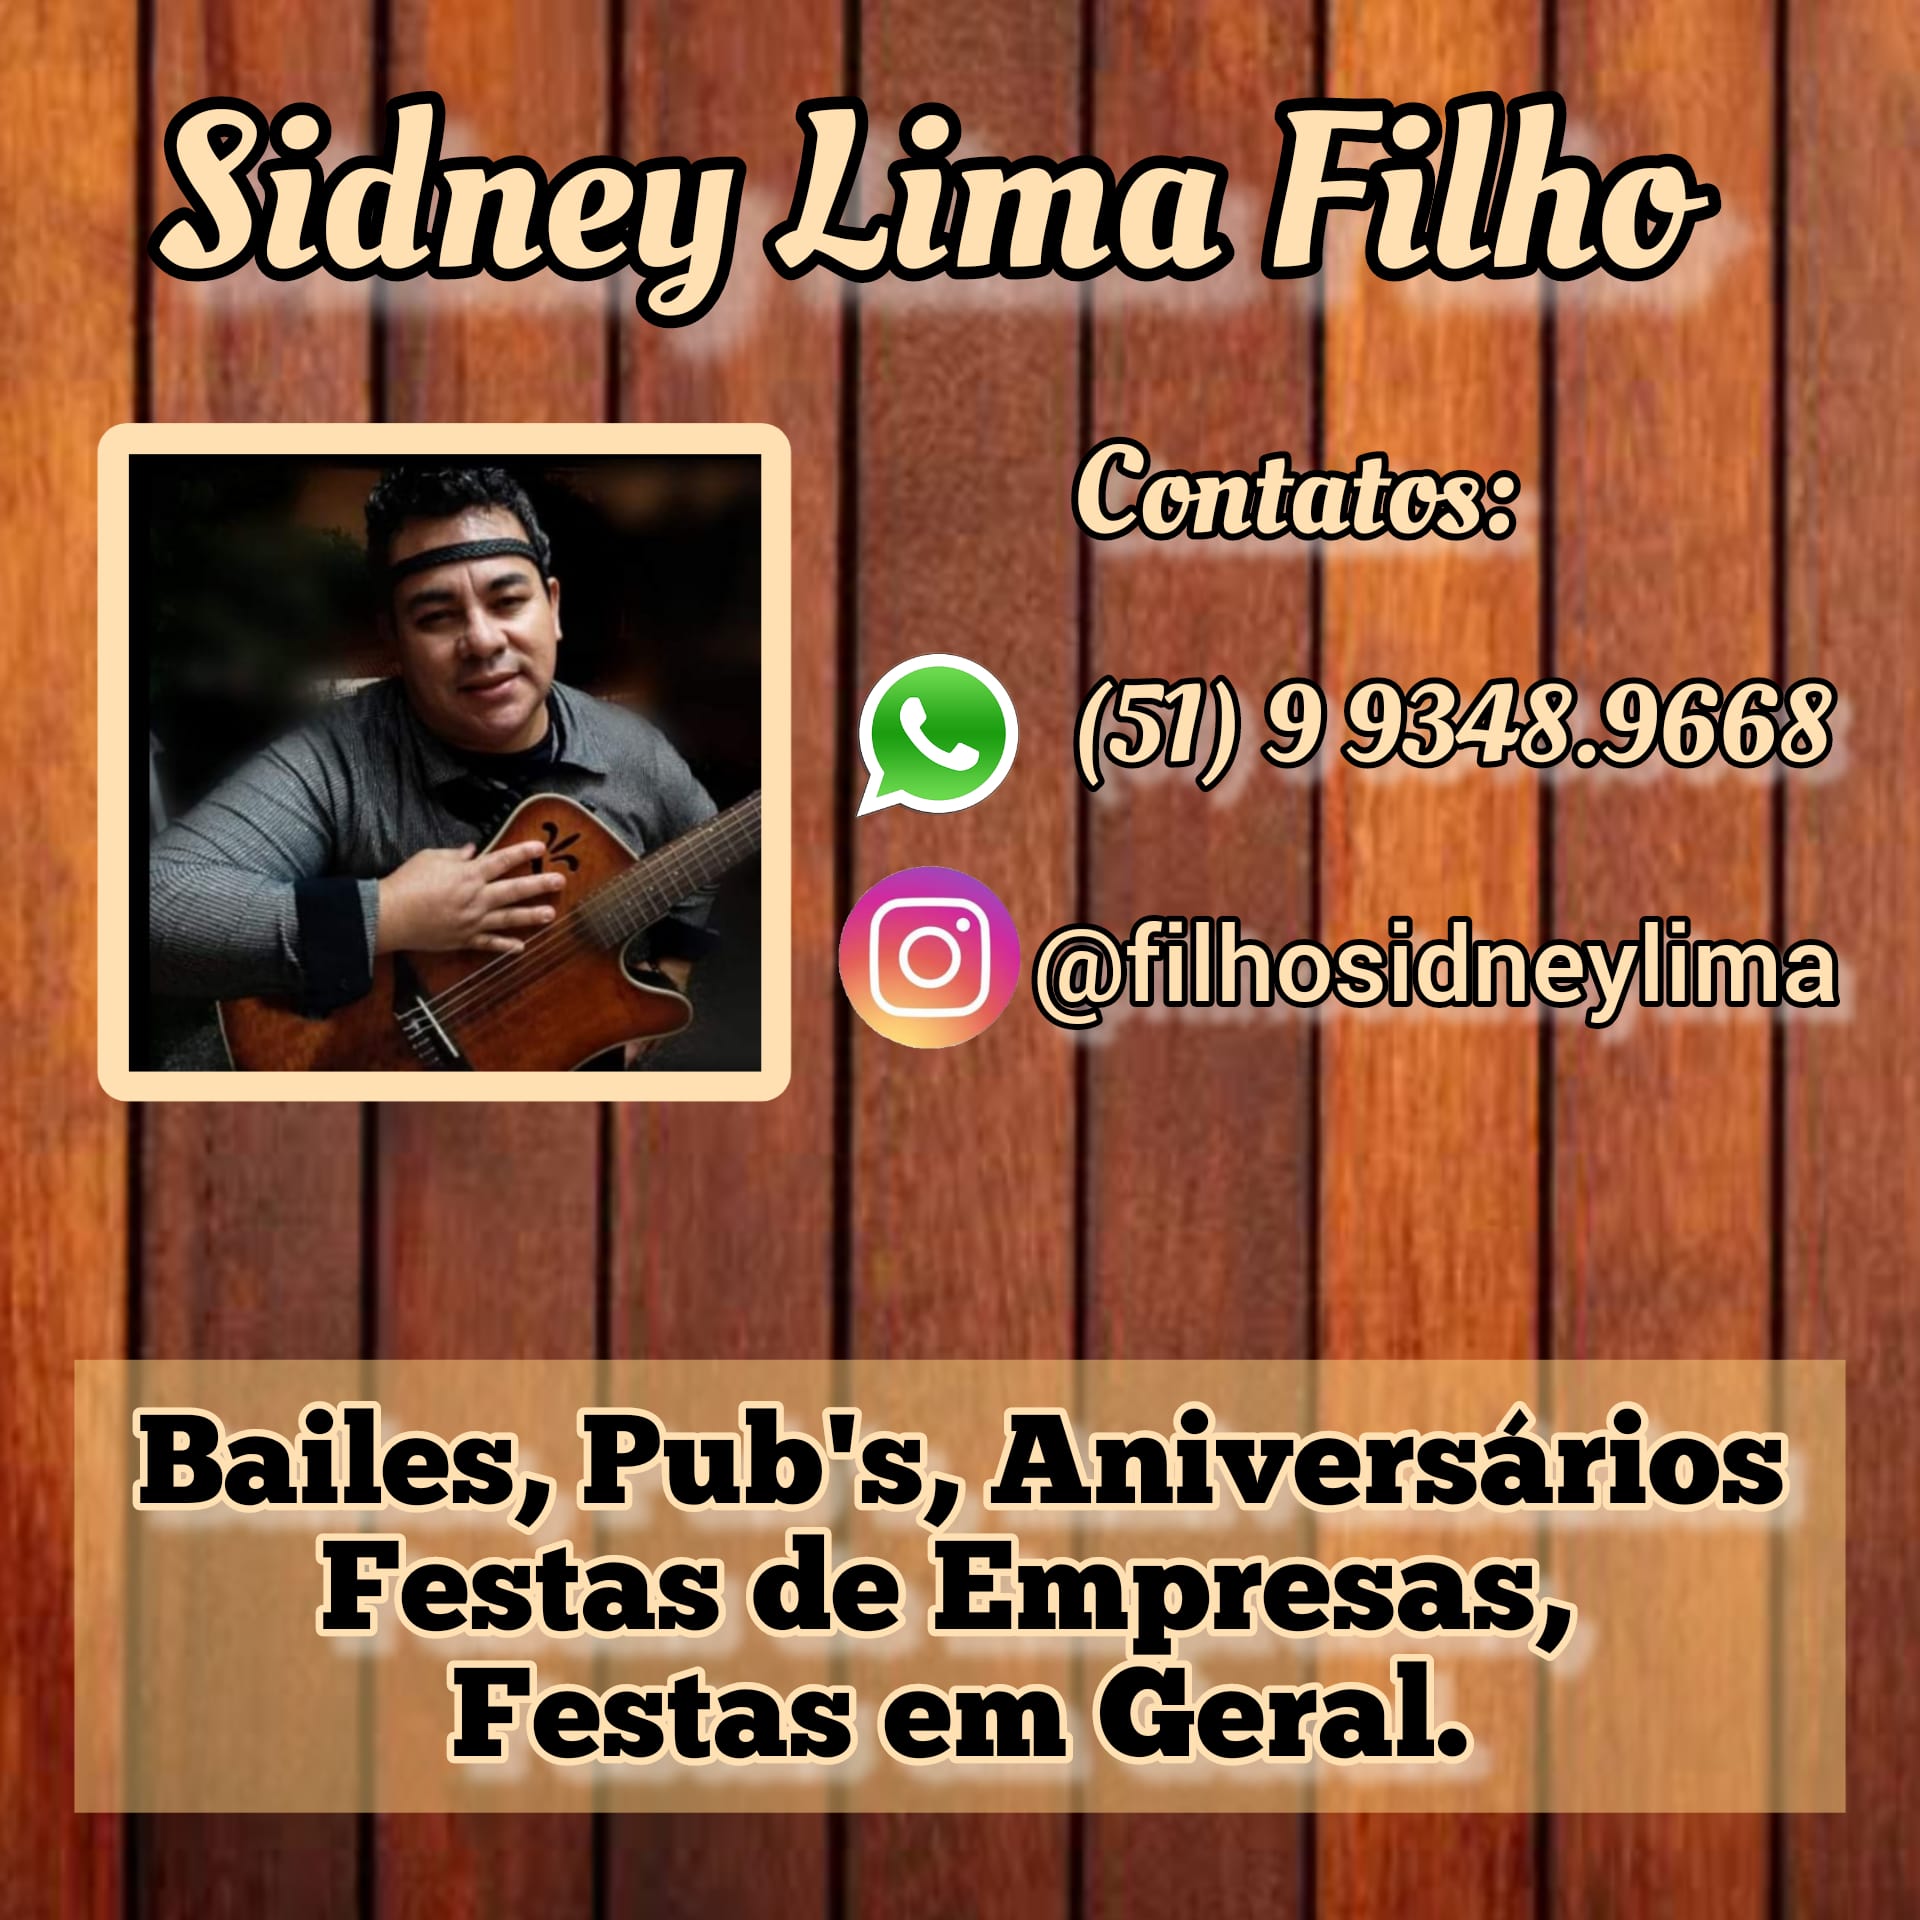 Sidney Lima Filho